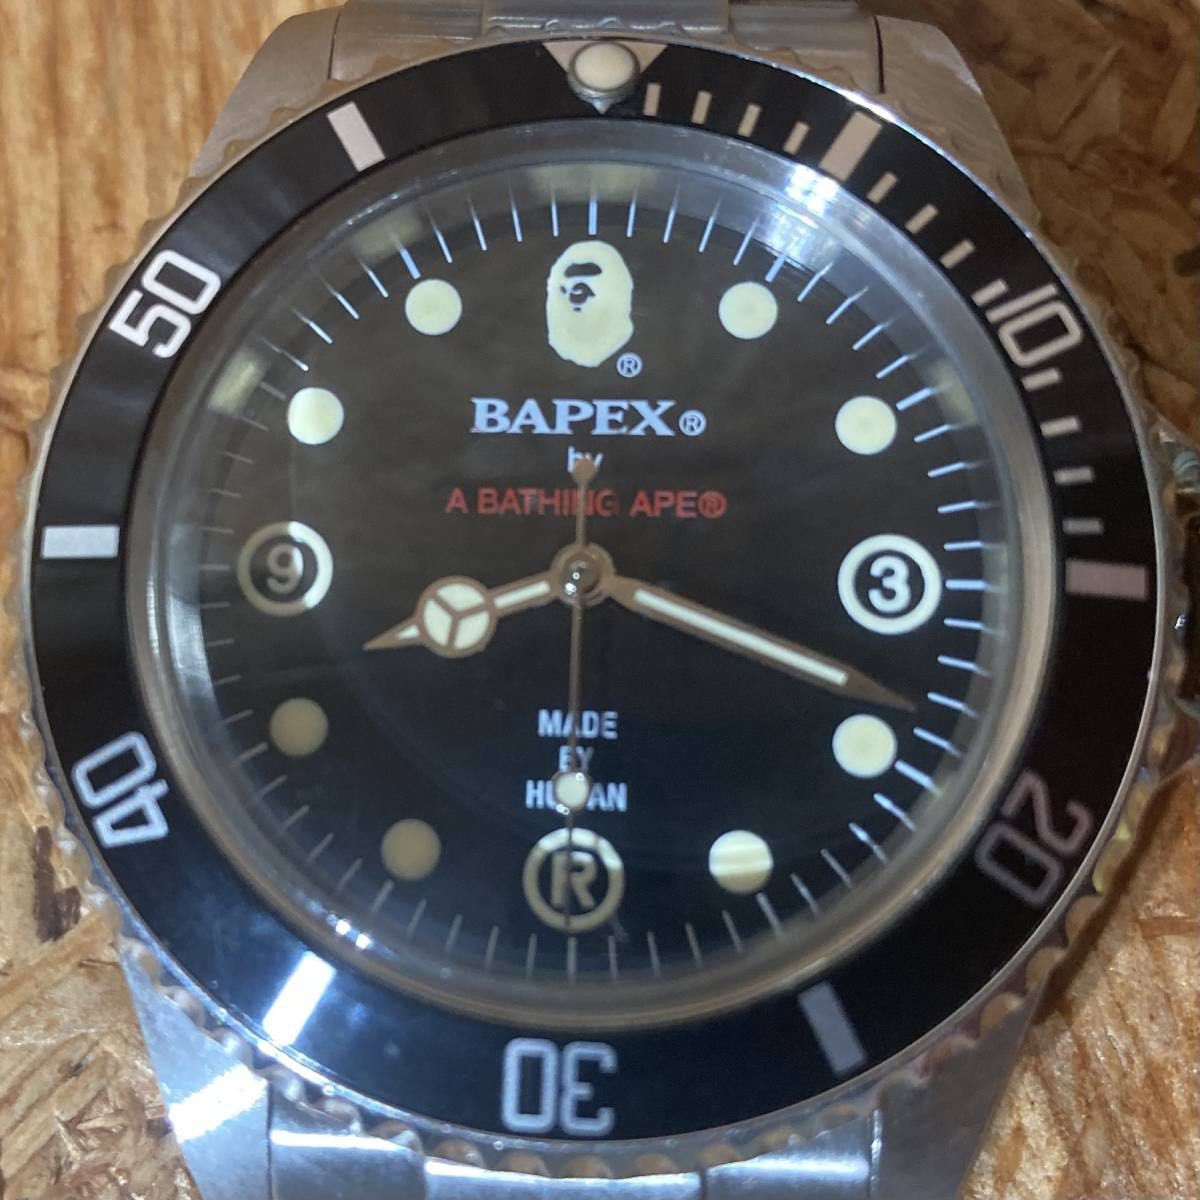 A BATHING APE BAPEX 自動巻き オートマチック 腕時計 